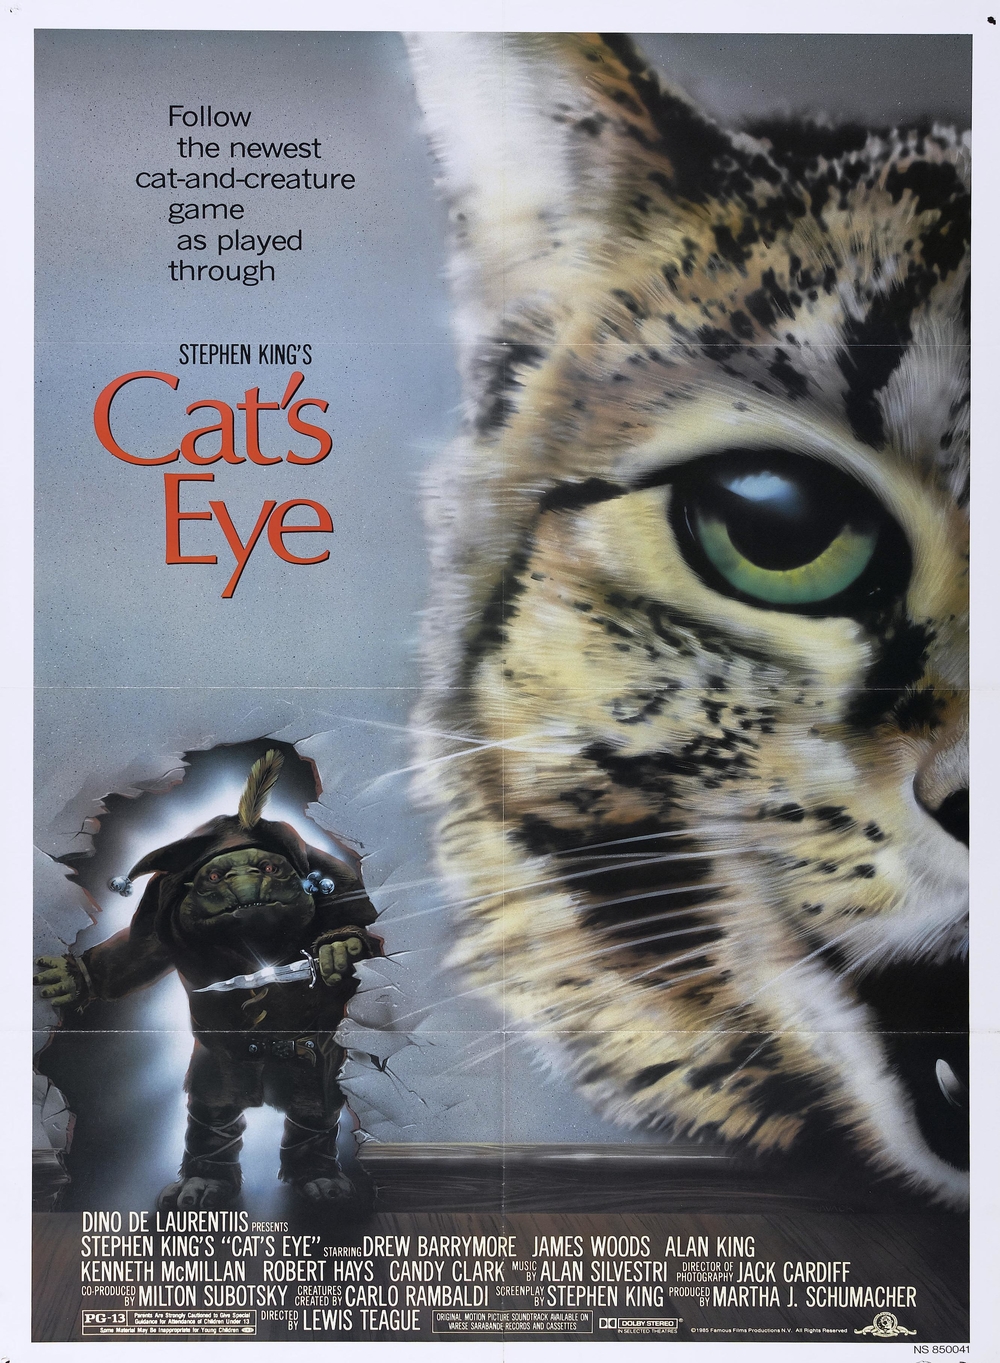 affiche du film Cat's Eye